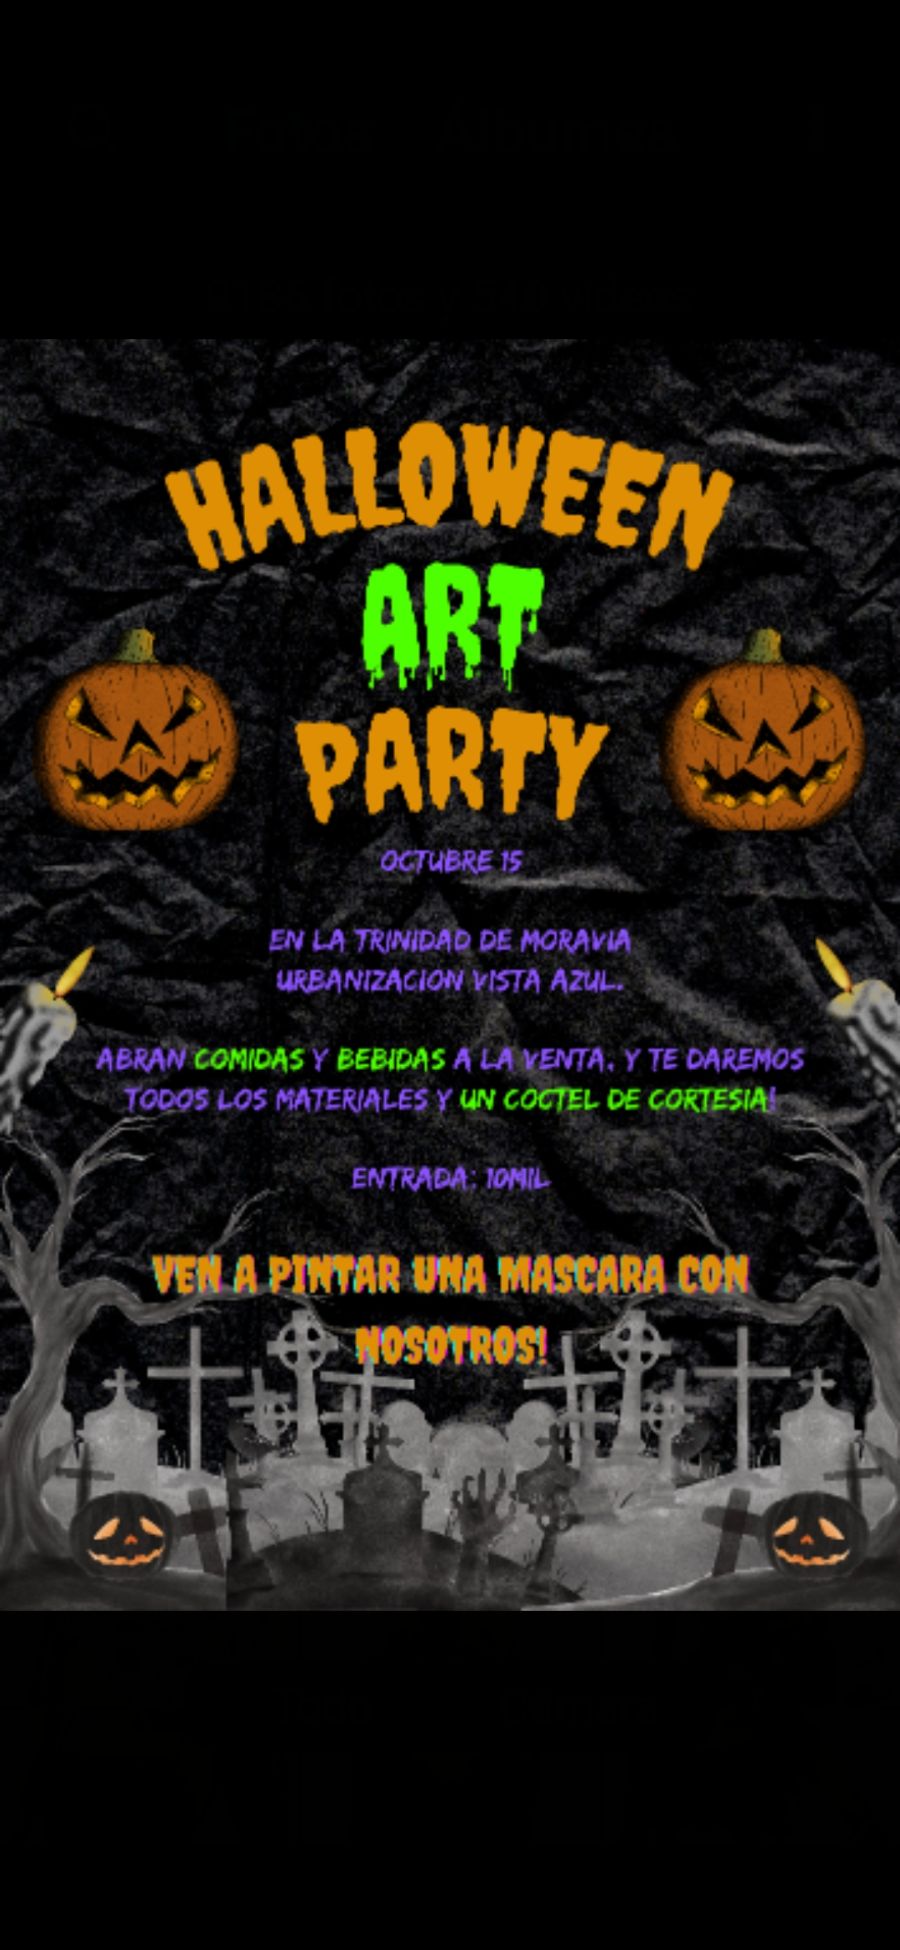 Halloween art party